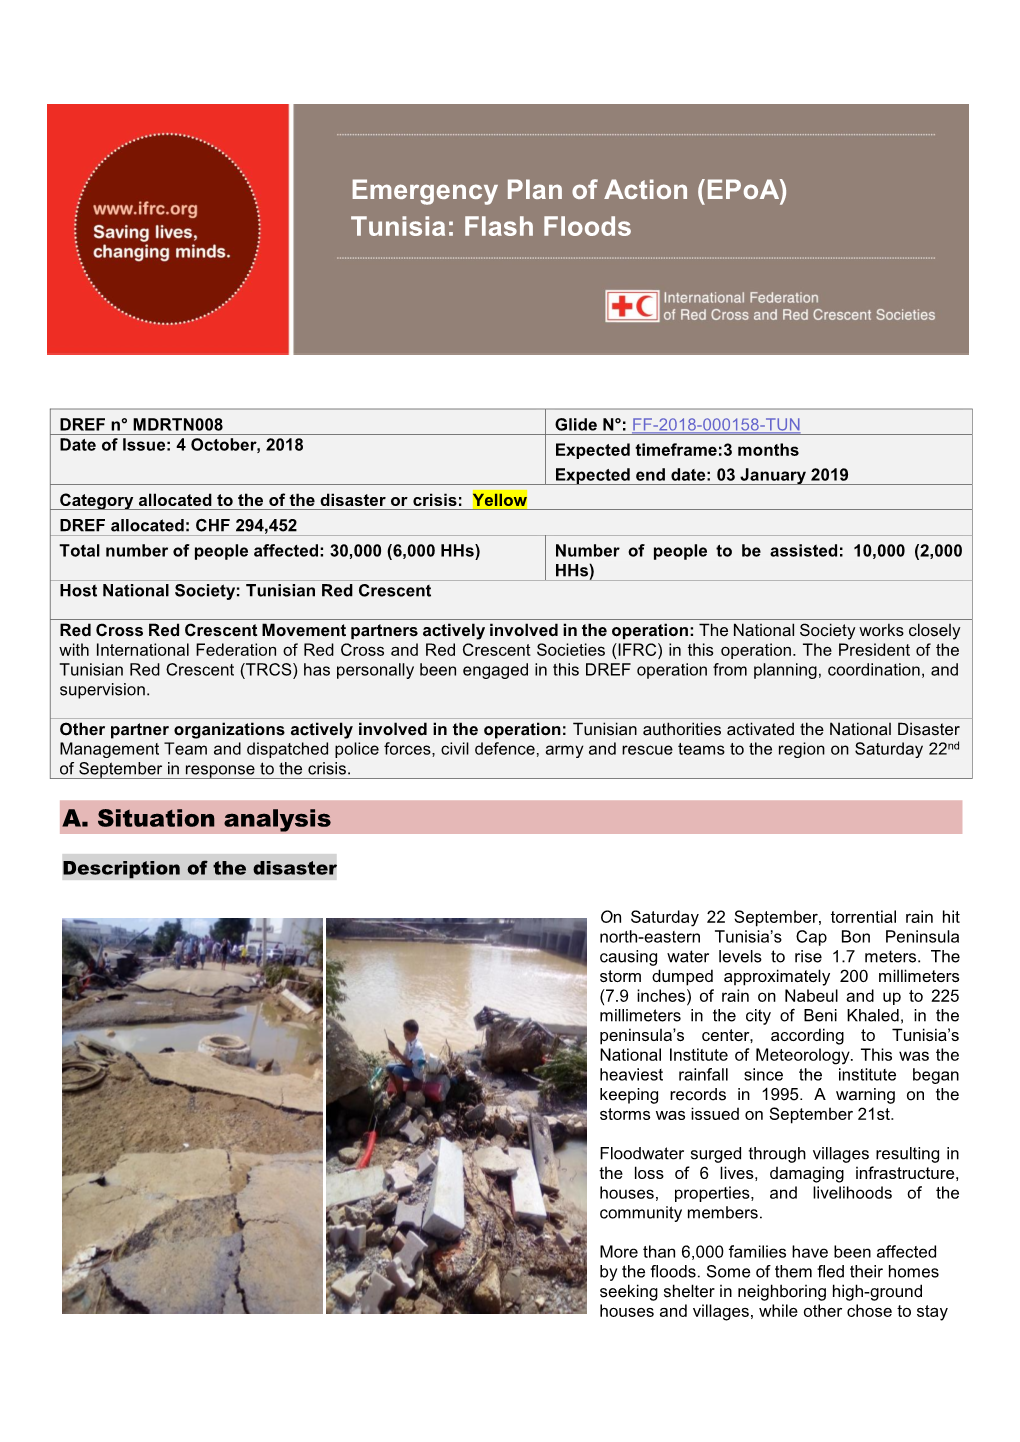 Tunisia: Flash Floods